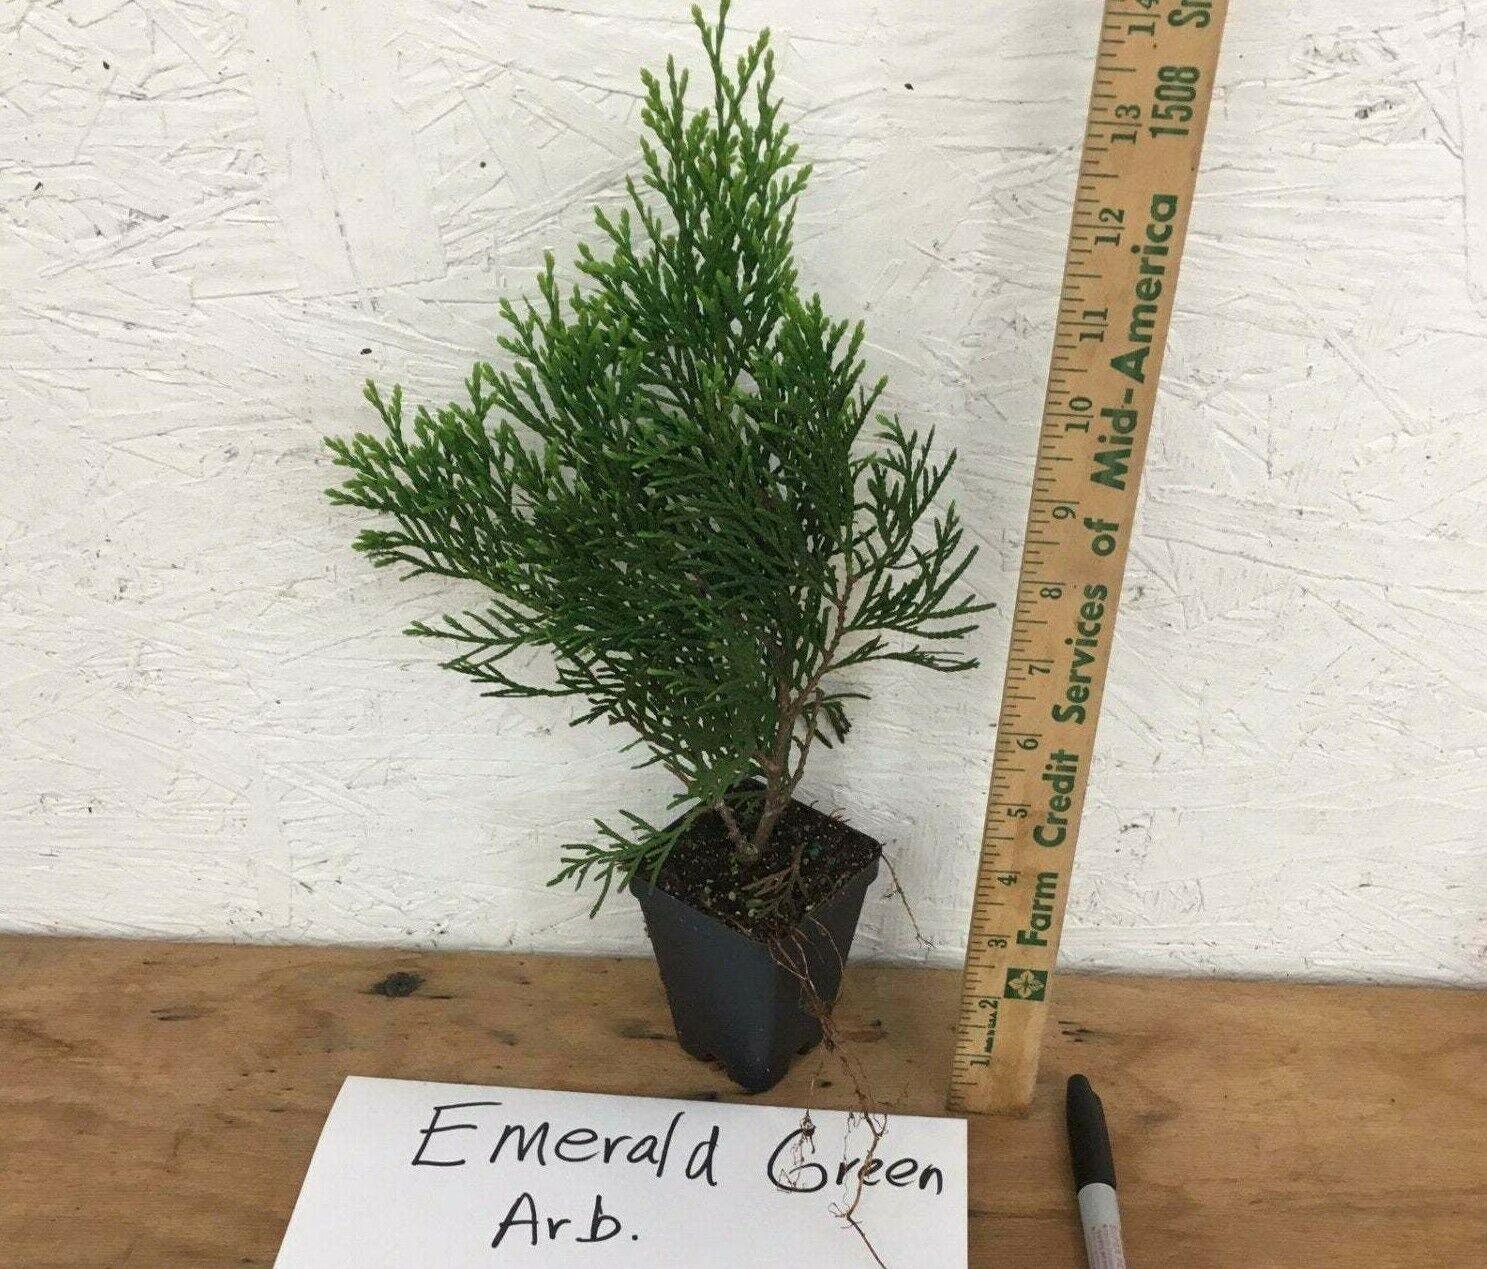 Emerald Green Arborvitae / White Cedar - 6-12" Tall, 3" Pot - Thuja occidentalis - The Nursery Center